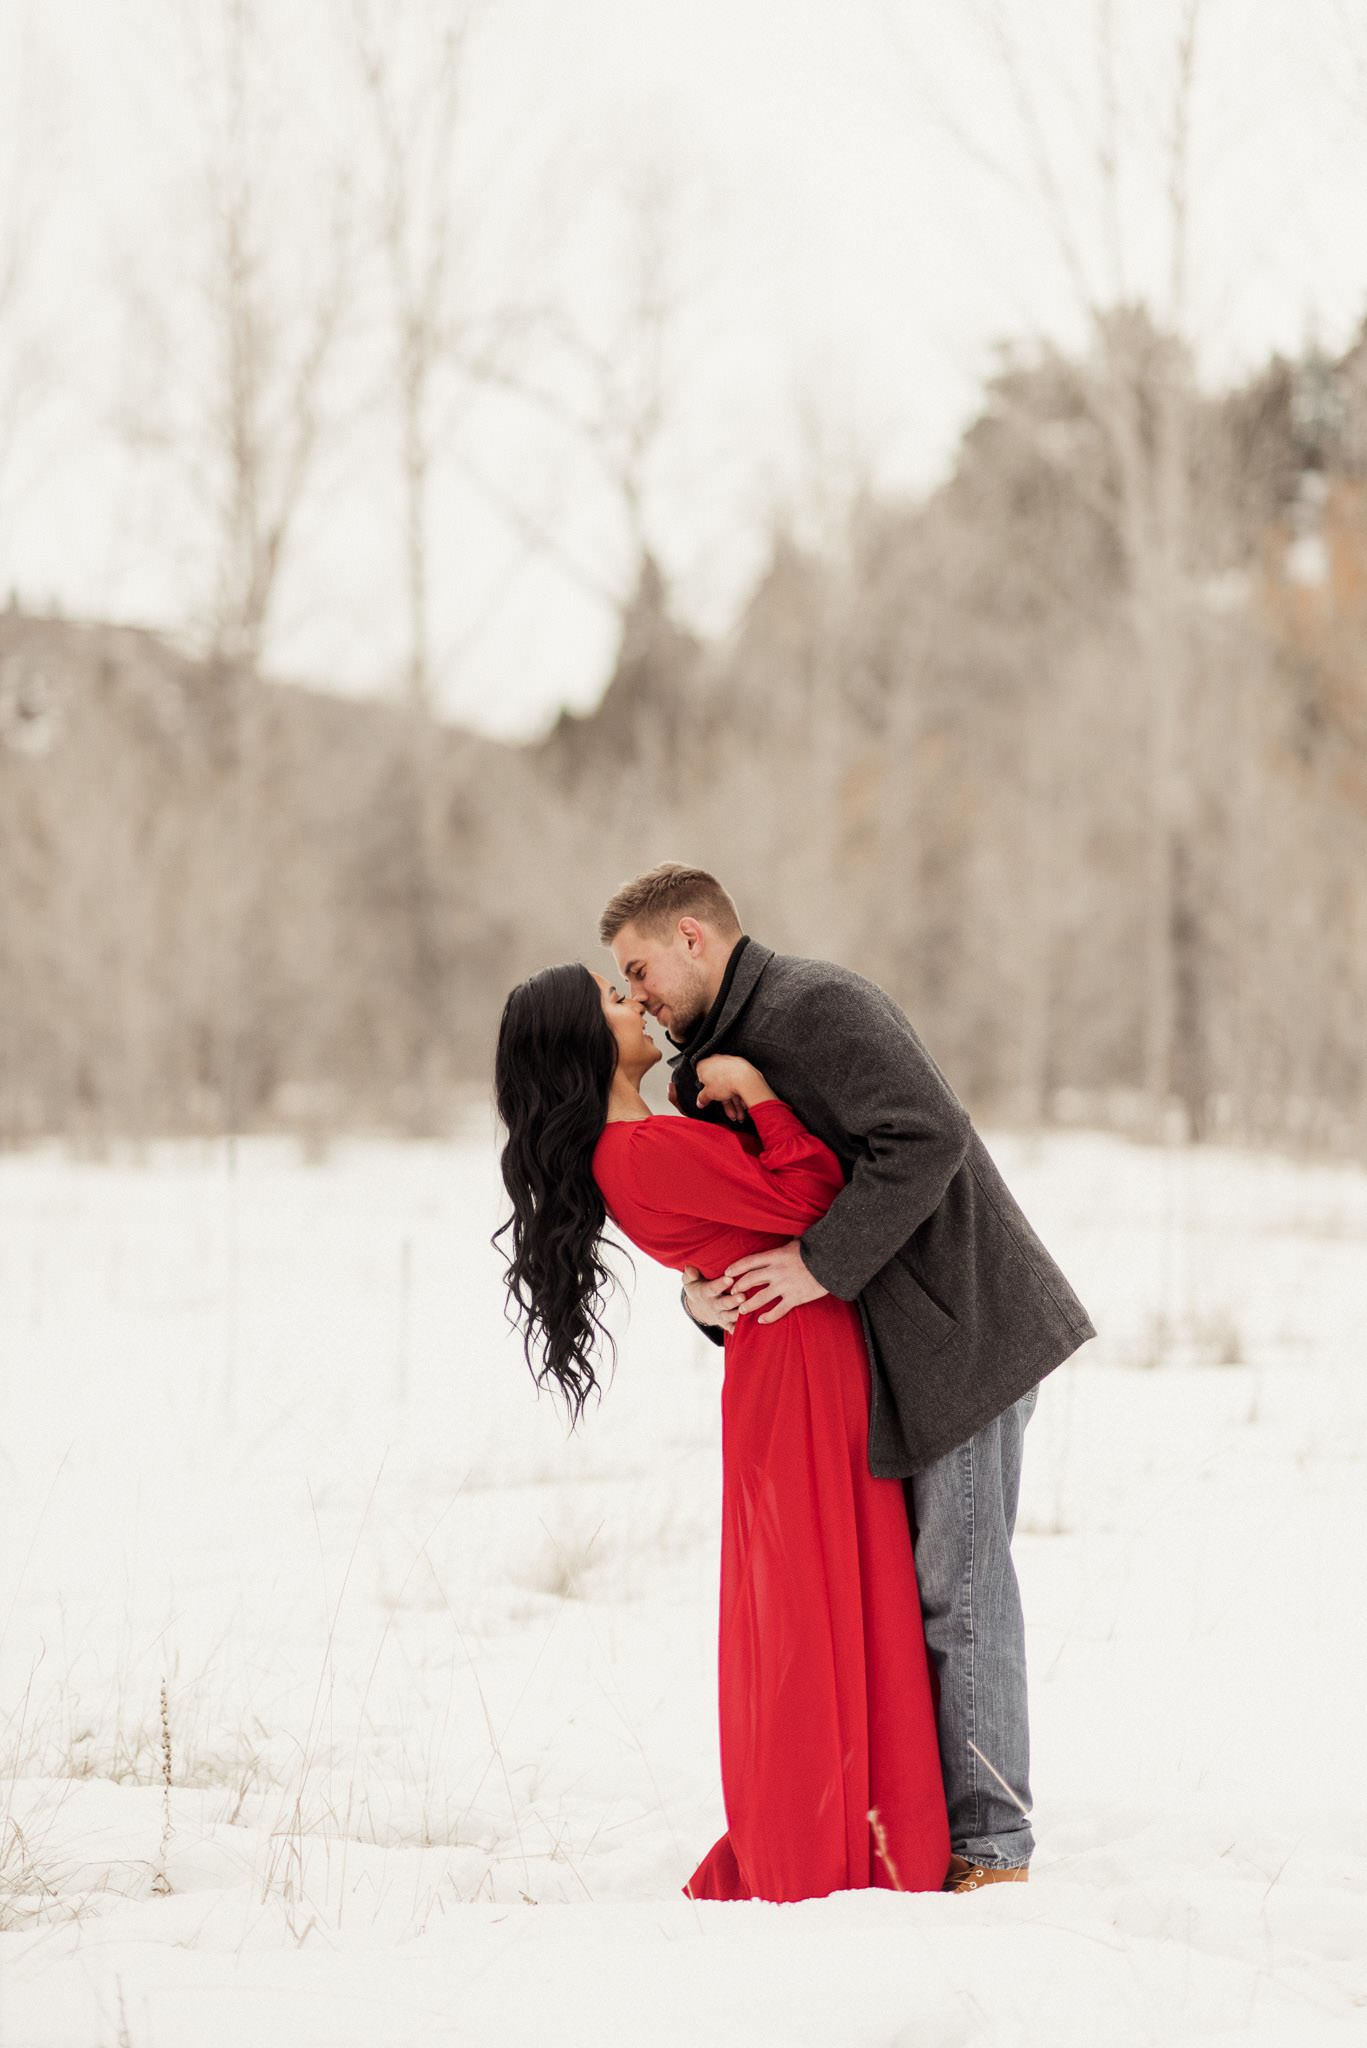 sandra-ryan-colorado-winter-snow-engagement-couples-valentines-red-houston-photographer-sm-26.jpg